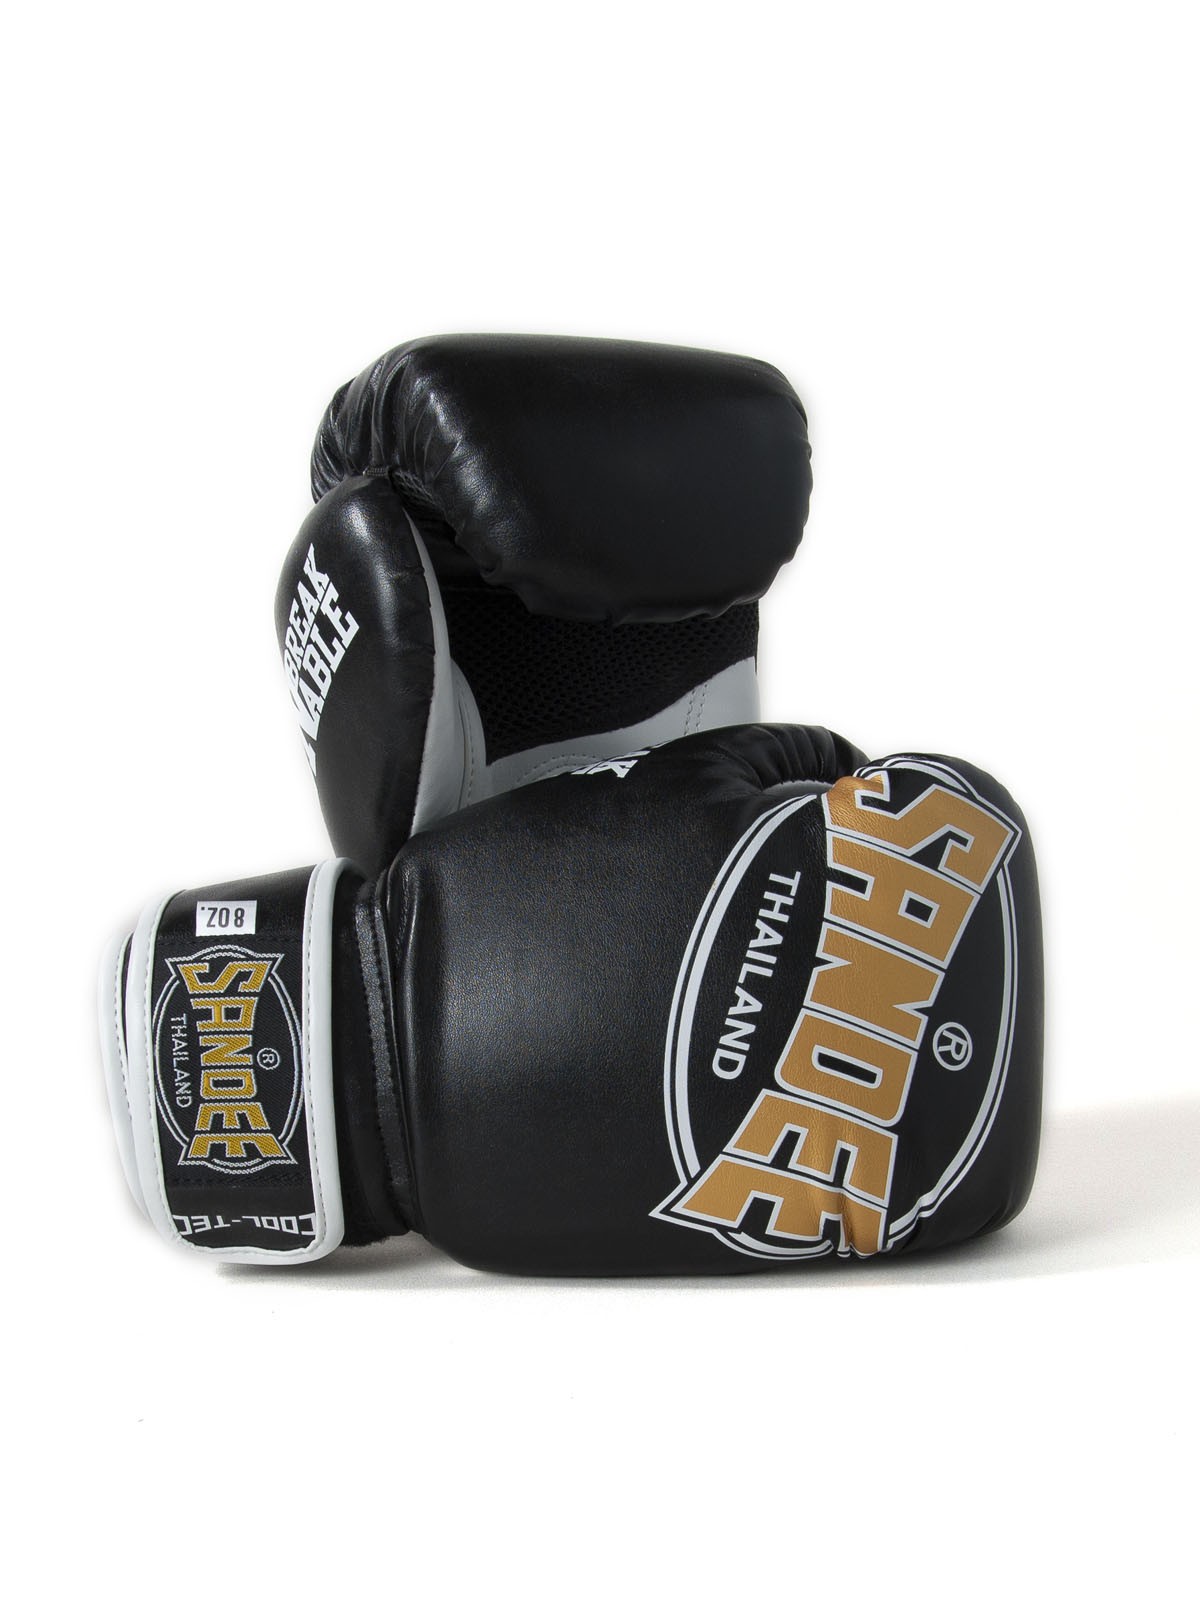 Sandee Cool-Tec Boxing Gloves Black Gold Muay Thai Kickboxing Striking Training 